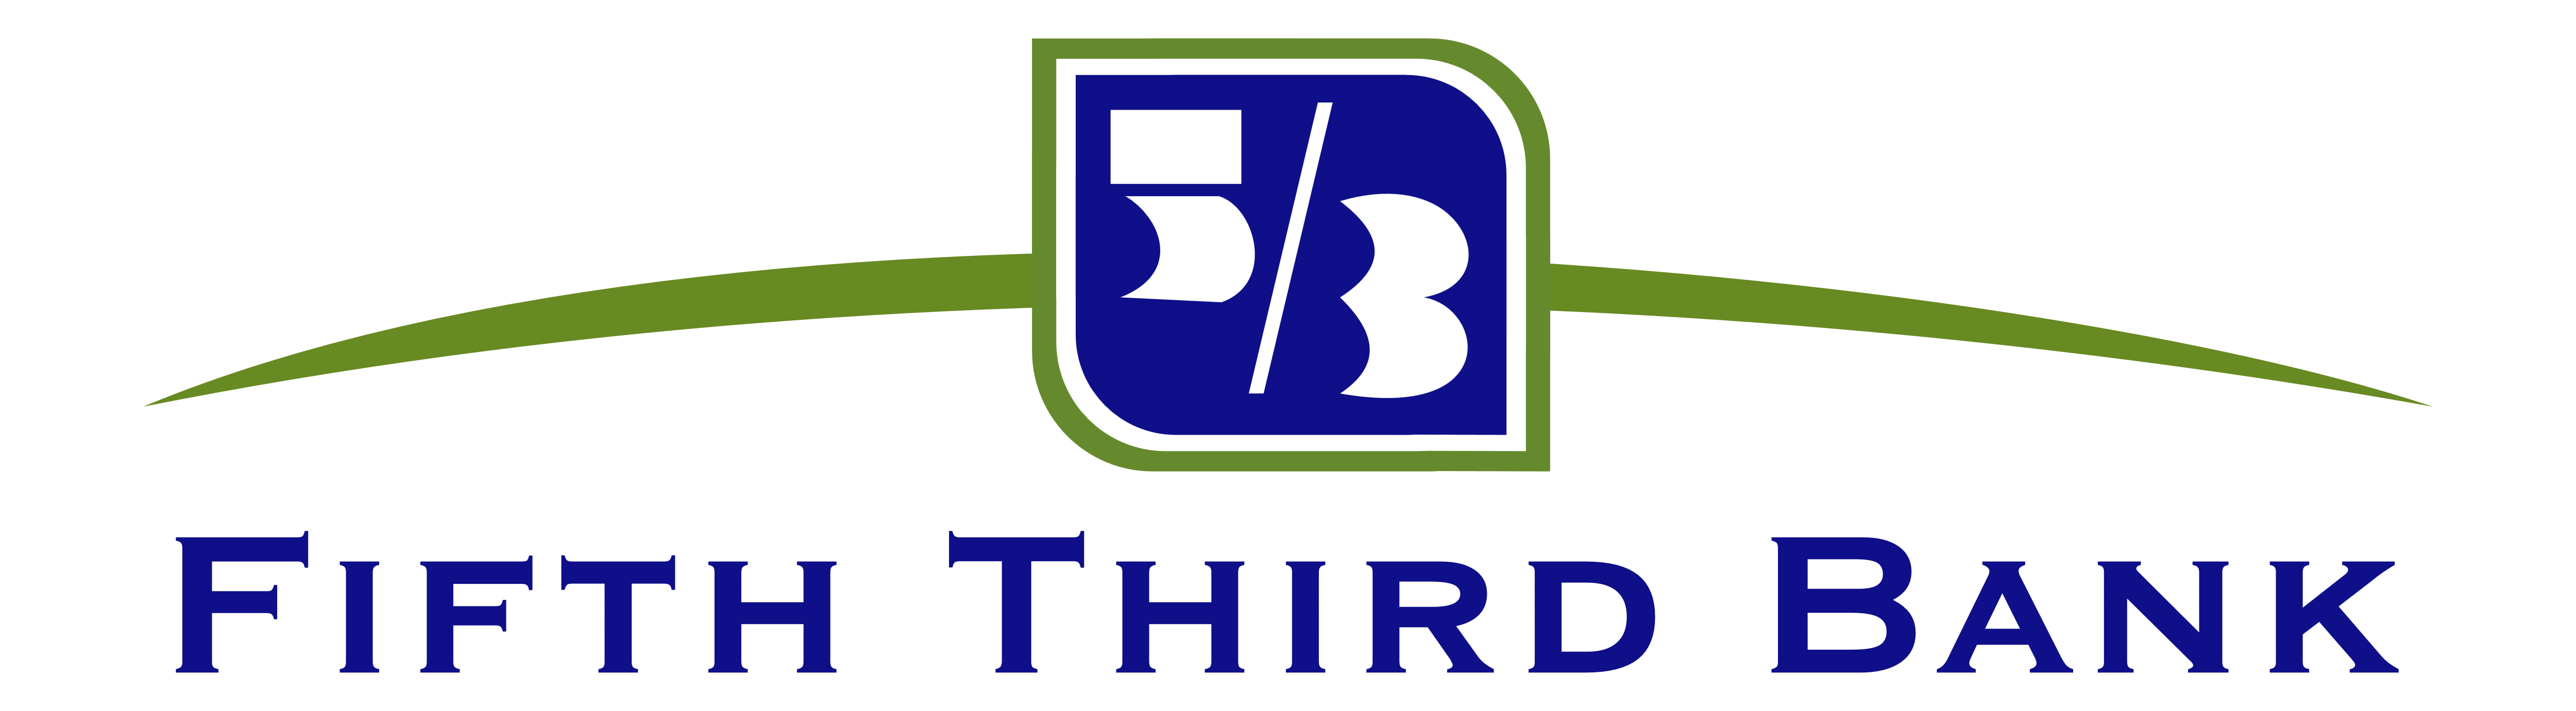 bank fifth third bank logos download #32707